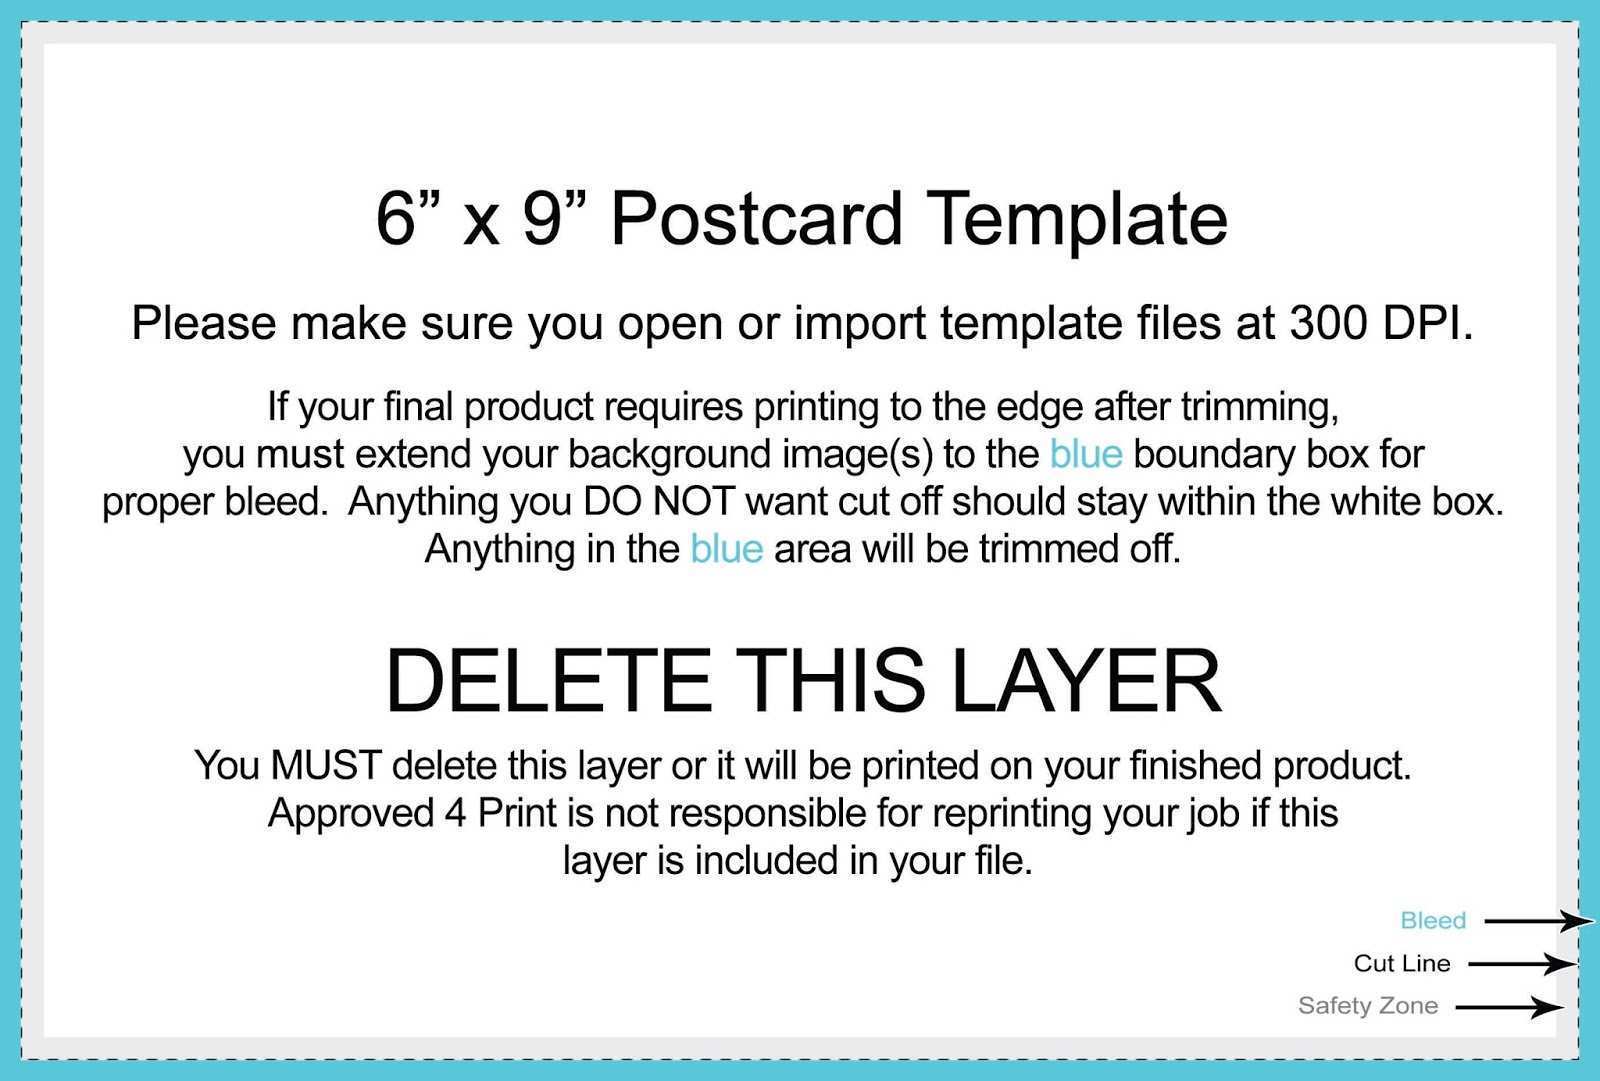 94 Standard Usps 9X6 Postcard Template in Photoshop by Usps 9X6 Postcard Template